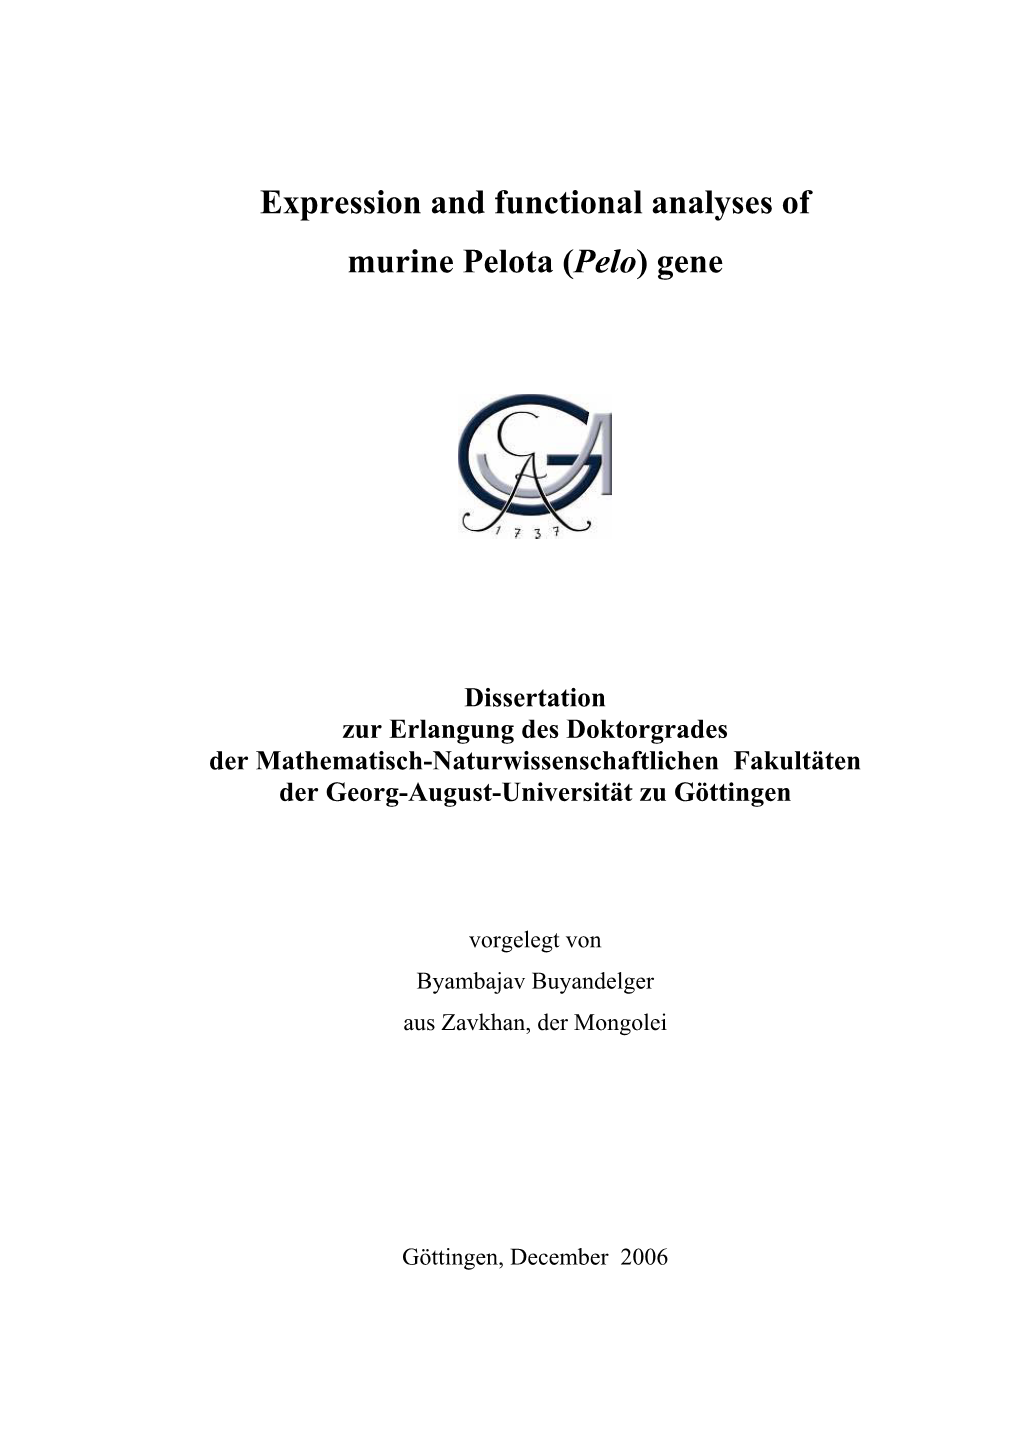 Expression and Functional Analyses of Murine Pelota (Pelo) Gene